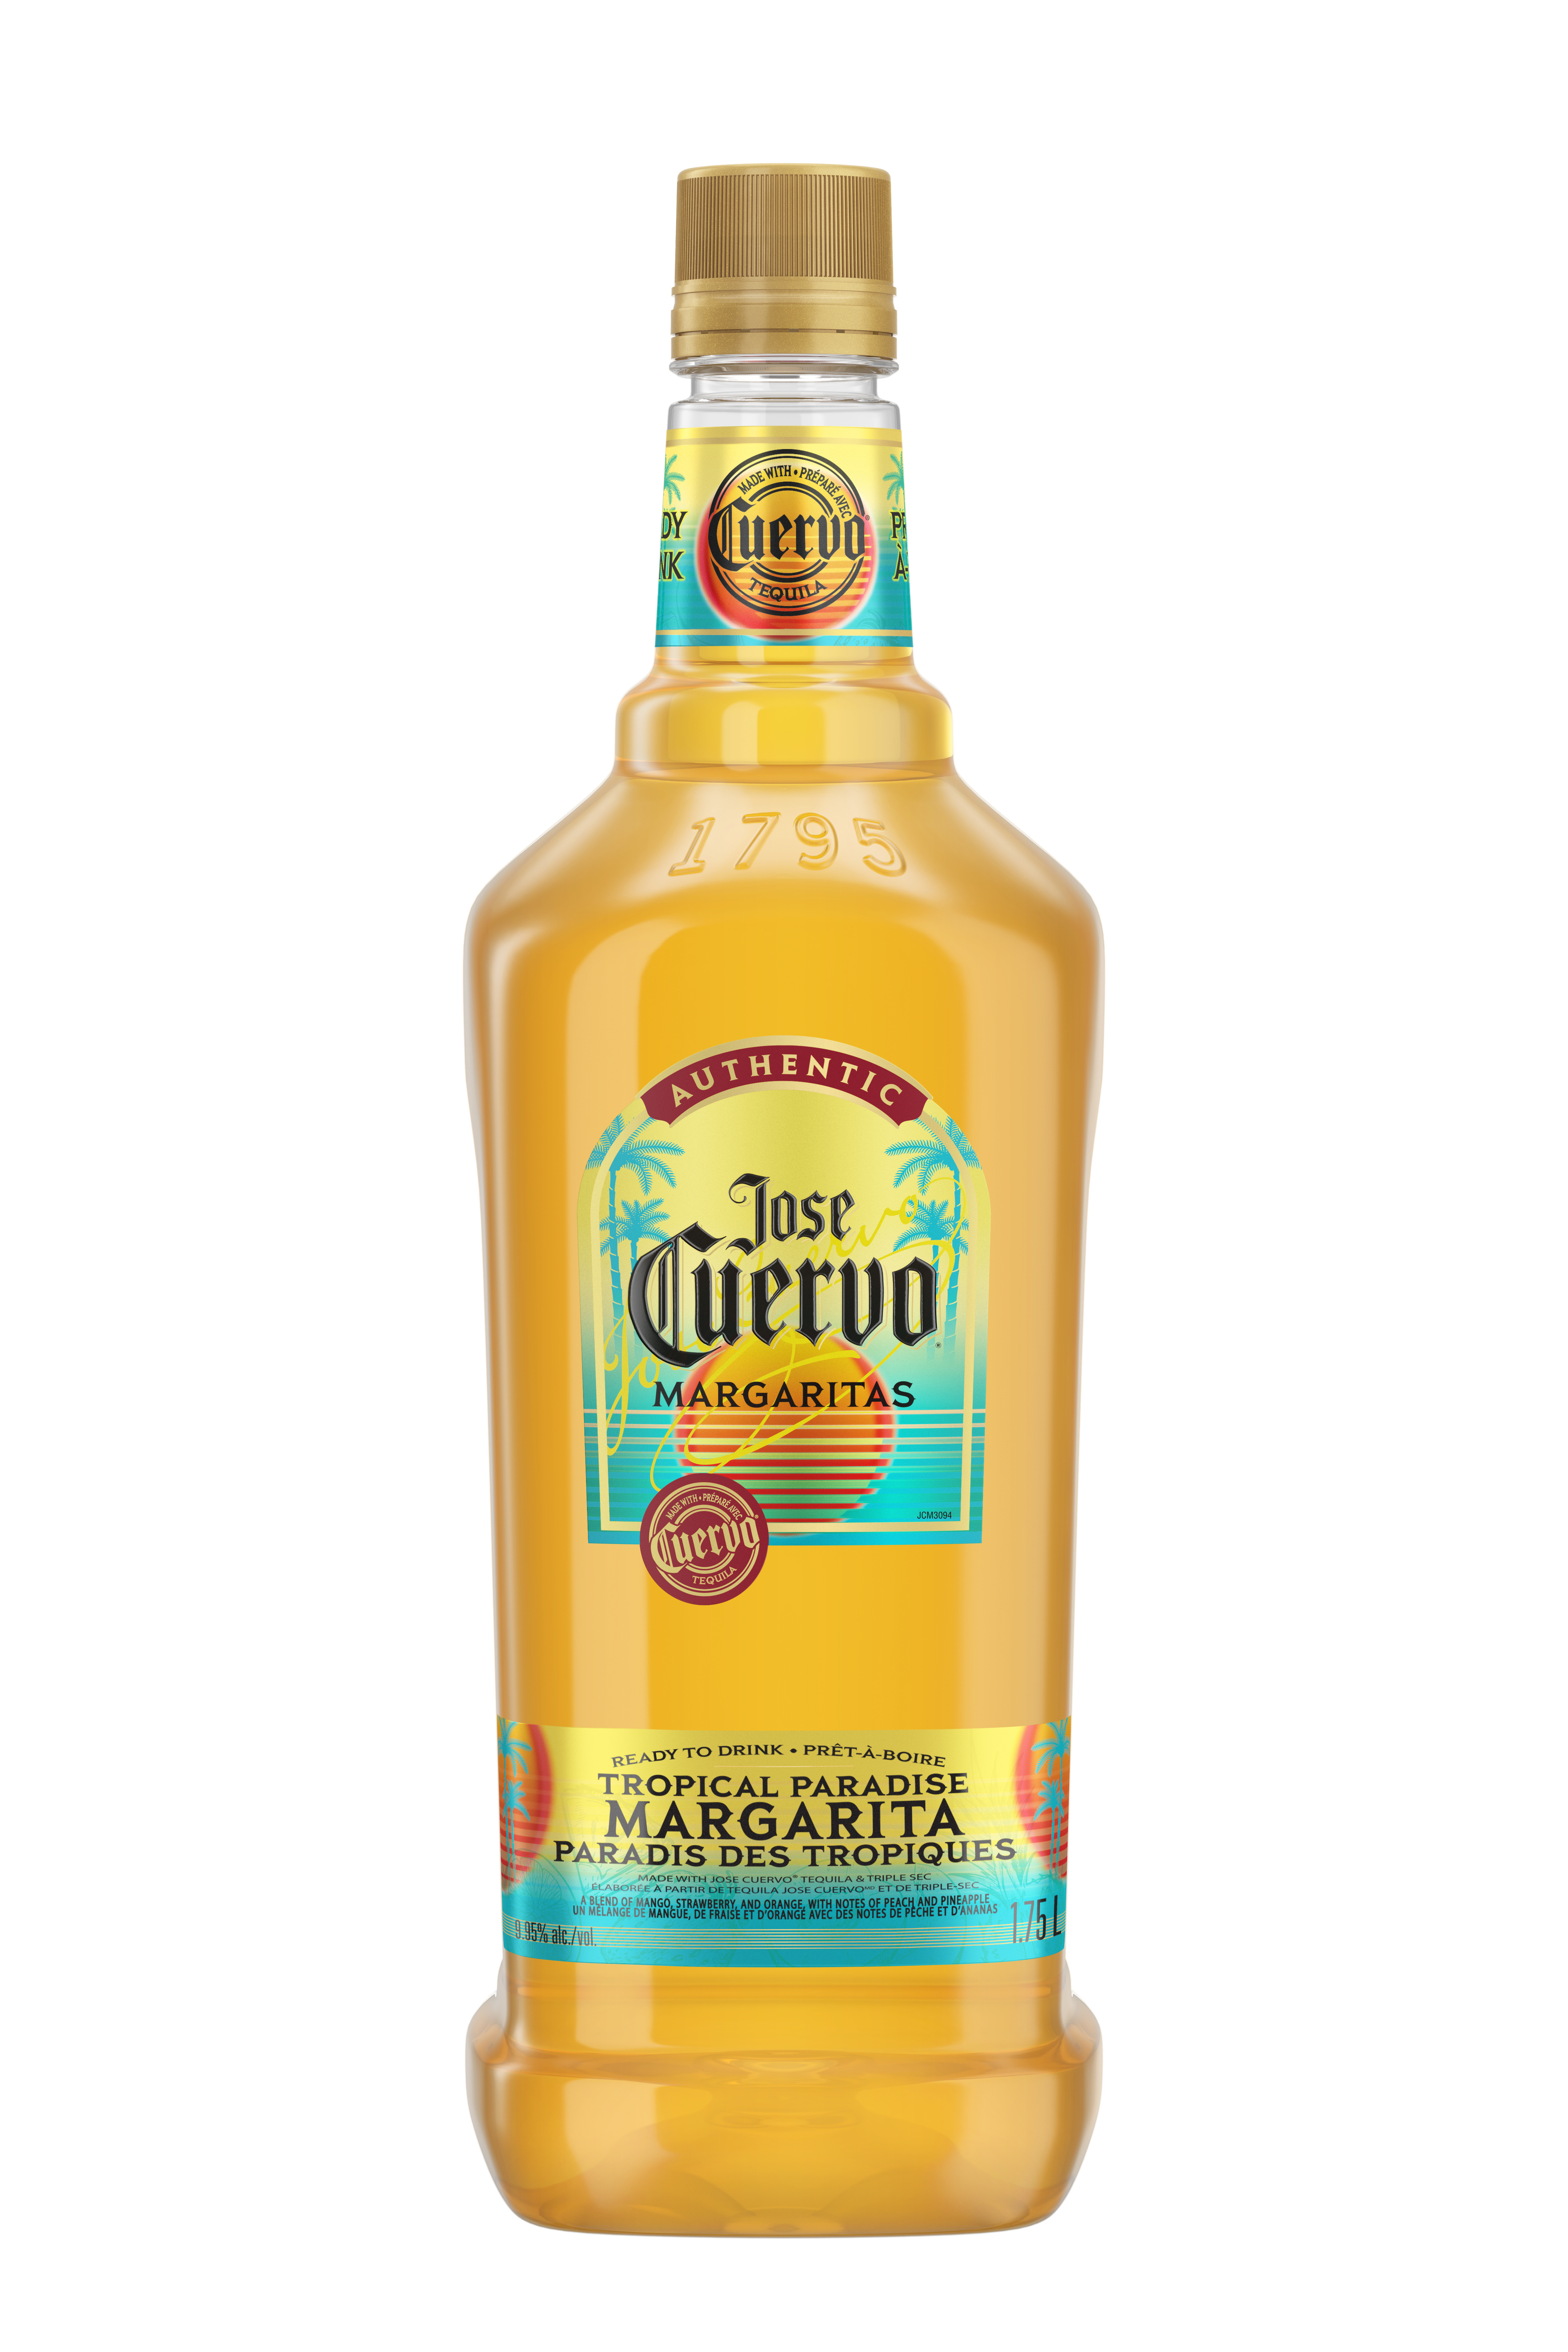 Bottle of Jose Cuervo Tropical Fruit Margarita mix with label, on white background